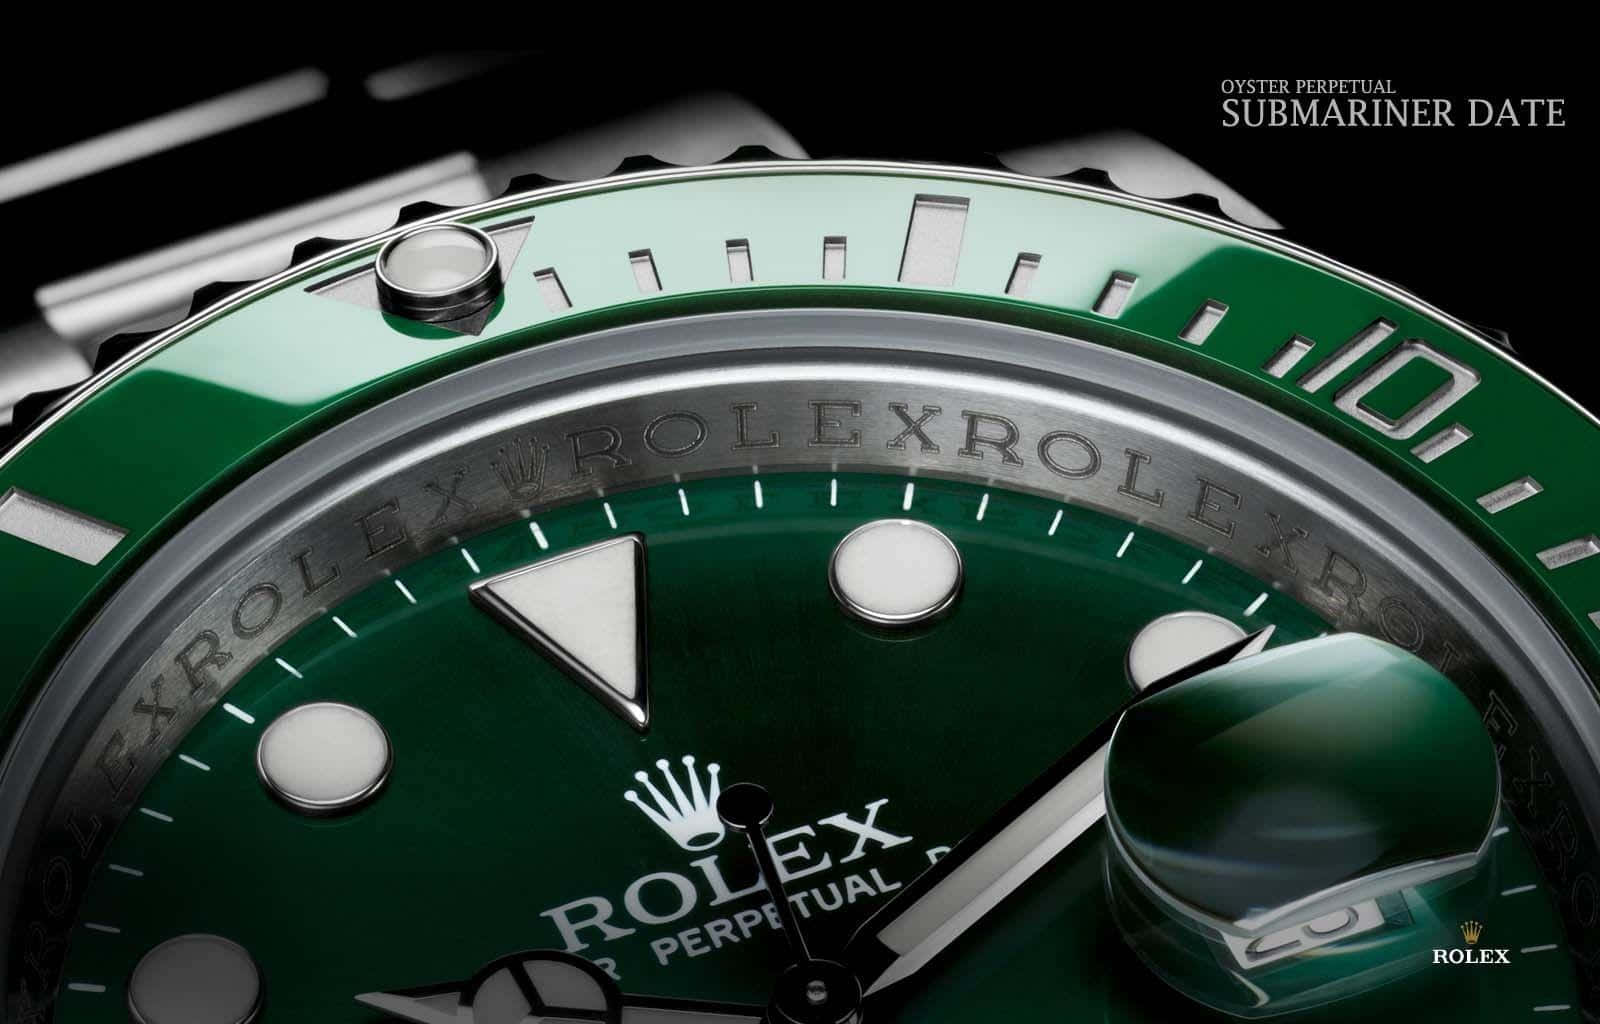 A Luxury Rolex watch on display